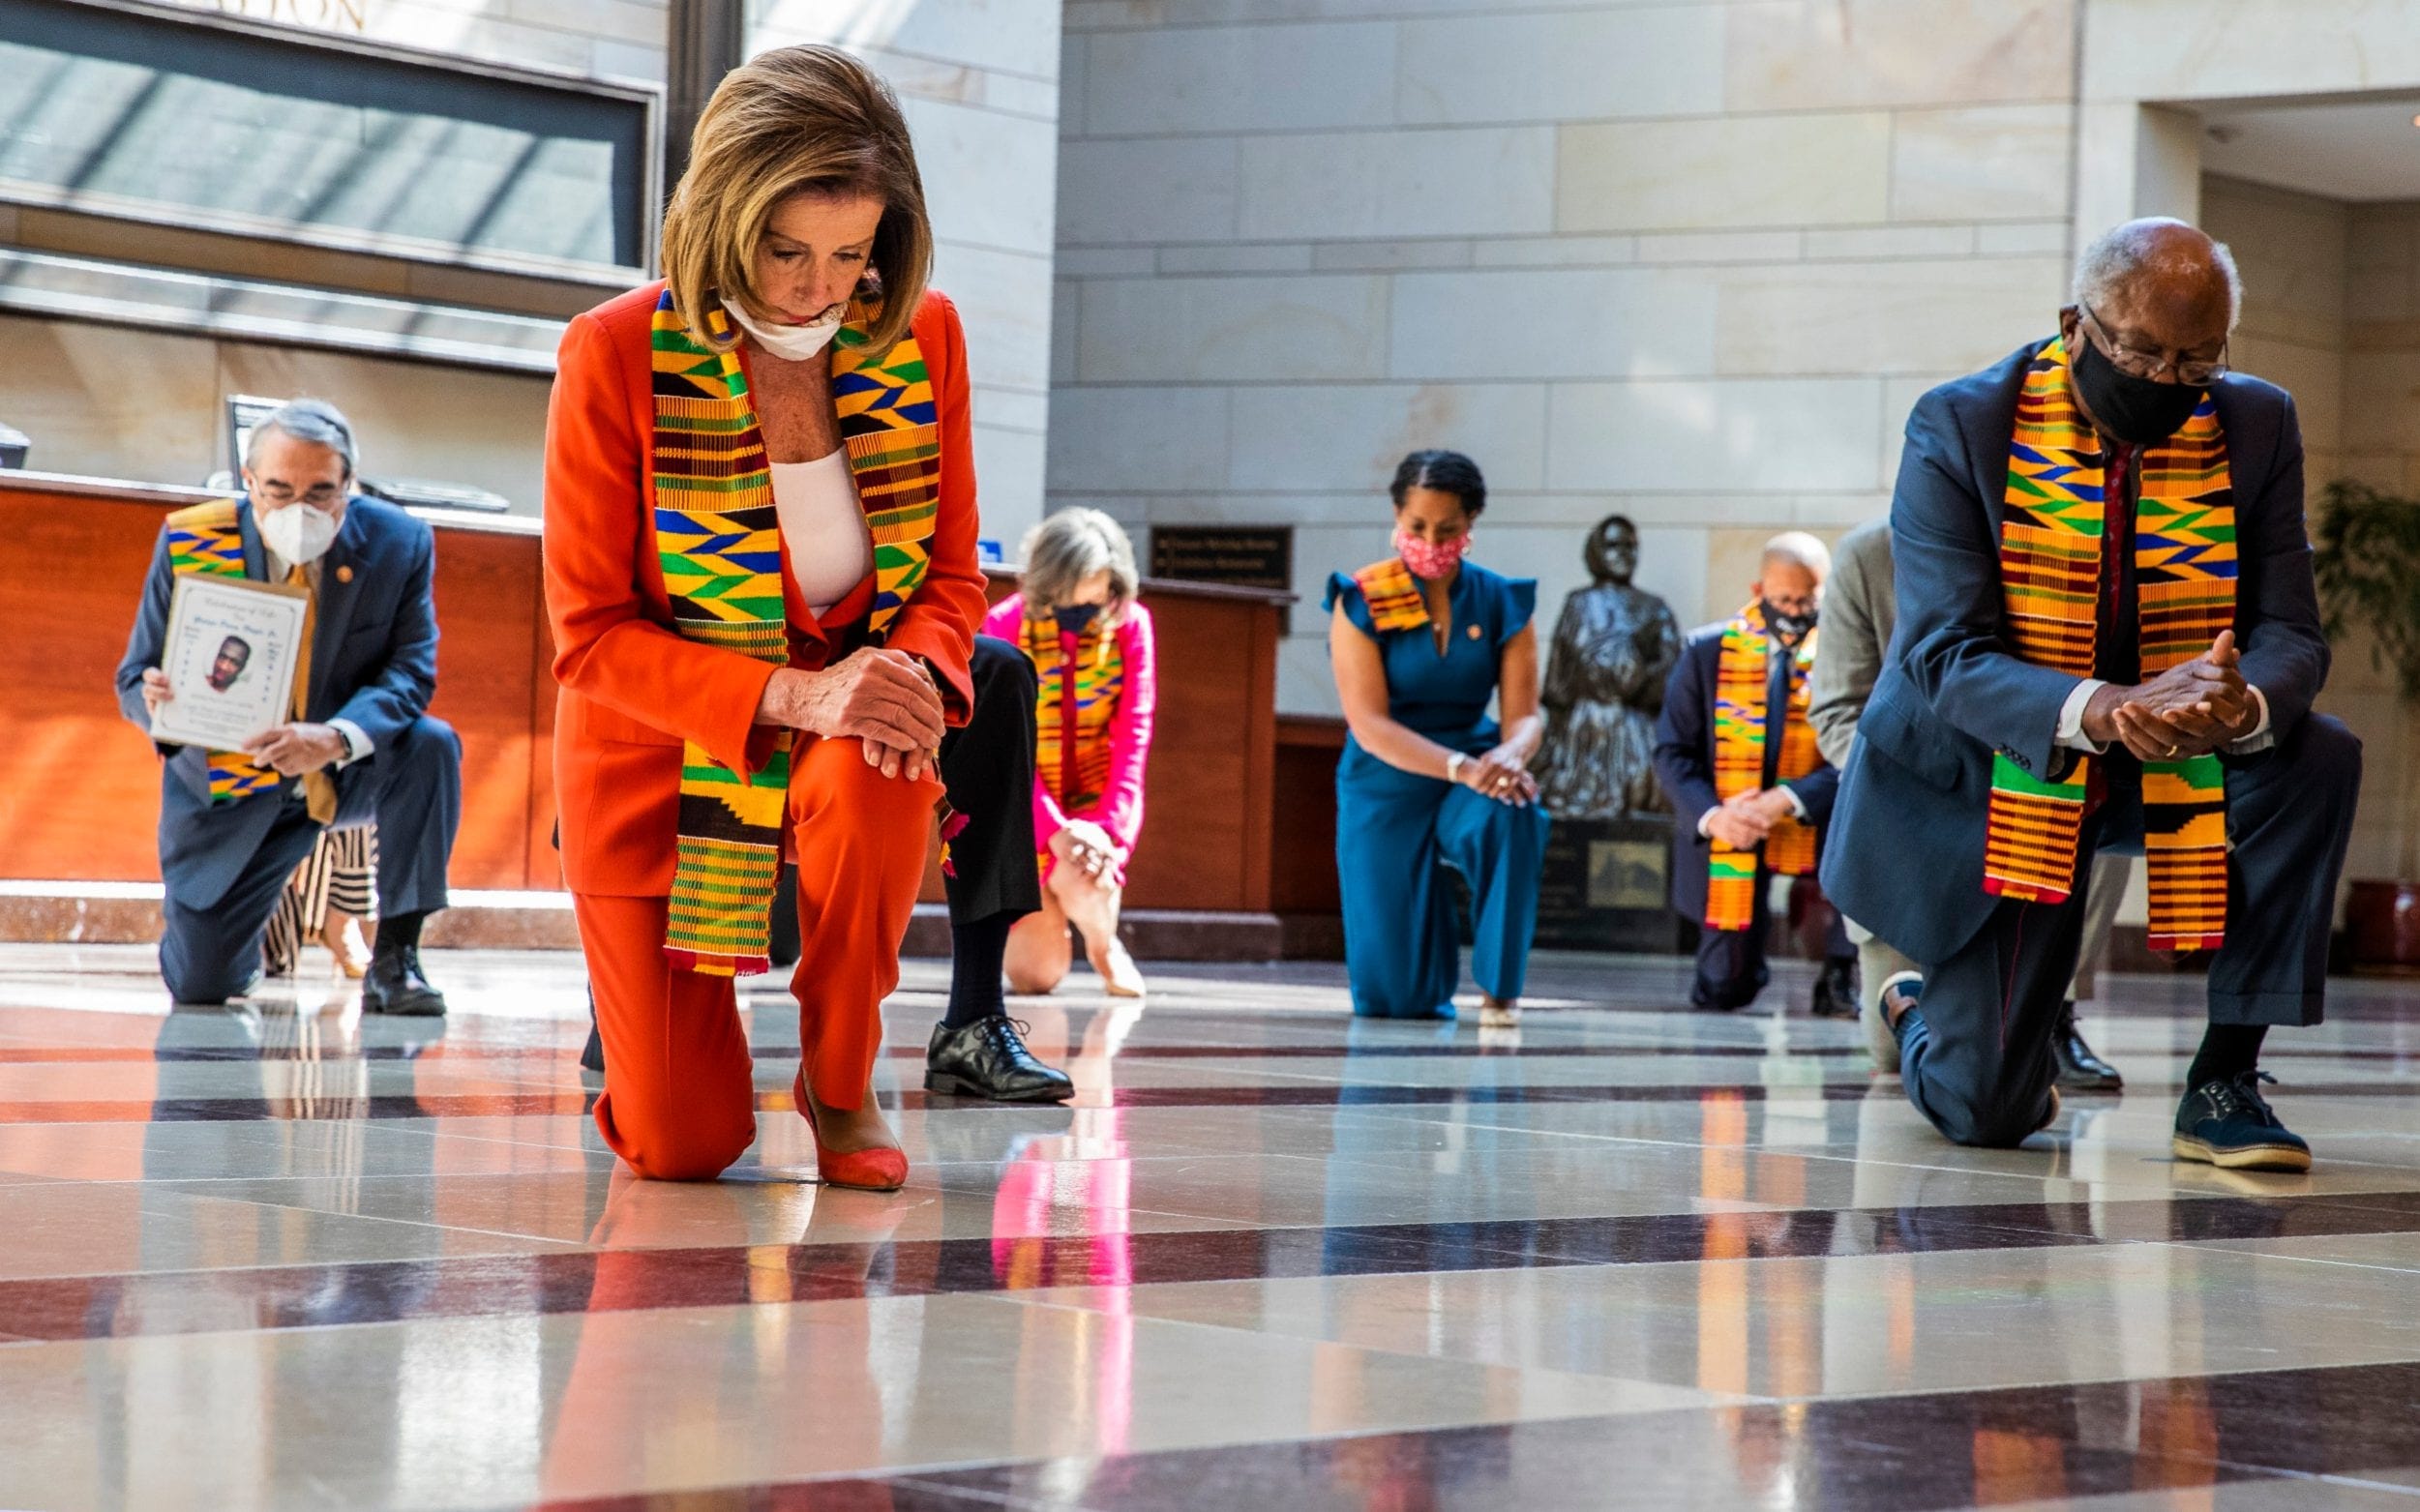 image of Nancy Pelosi and members of congress wearing kente cloth scarves and kneeling